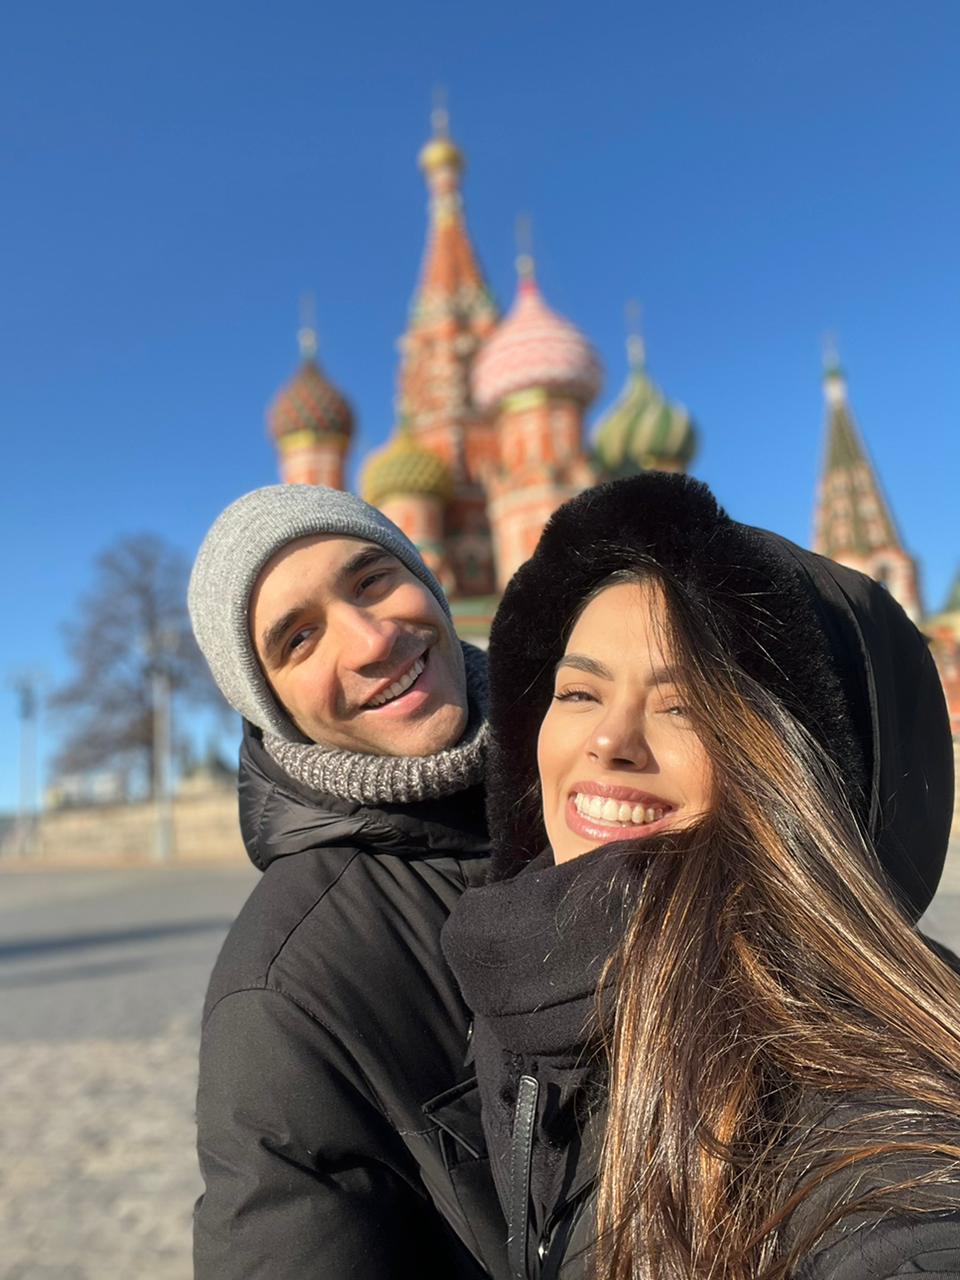 O casal na Rússia, antes de saírem do país.